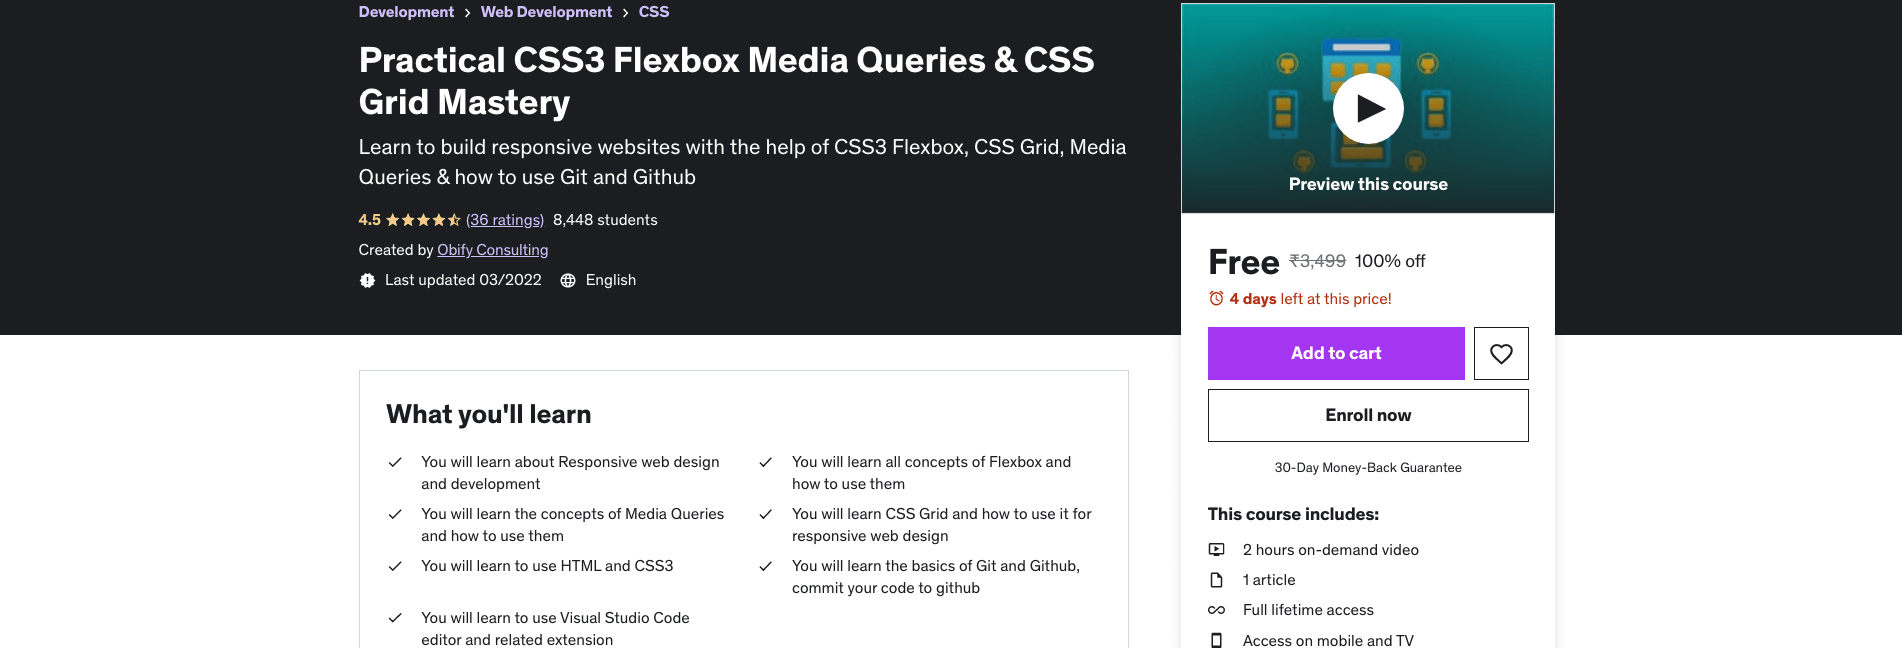 Practical CSS3 Flexbox Media Queries & CSS Grid Mastery